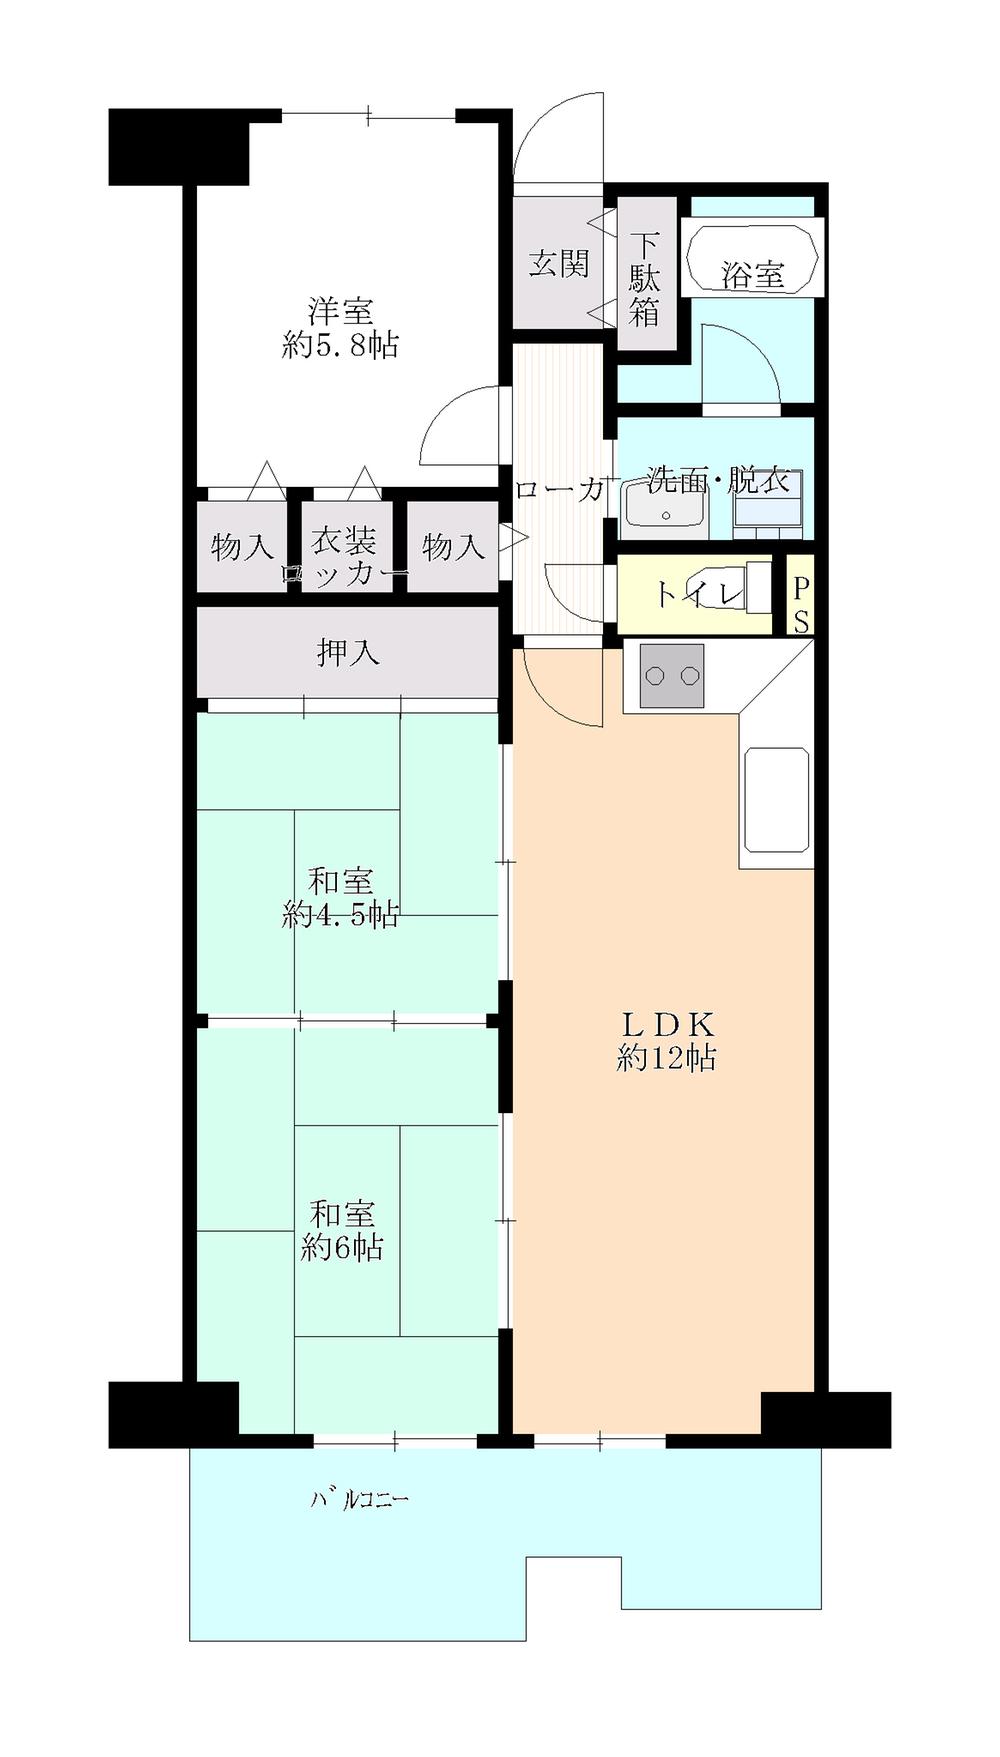 Floor plan. 3LDK, Price 9.8 million yen, Occupied area 64.79 sq m , Balcony area 10.33 sq m Mato drawings